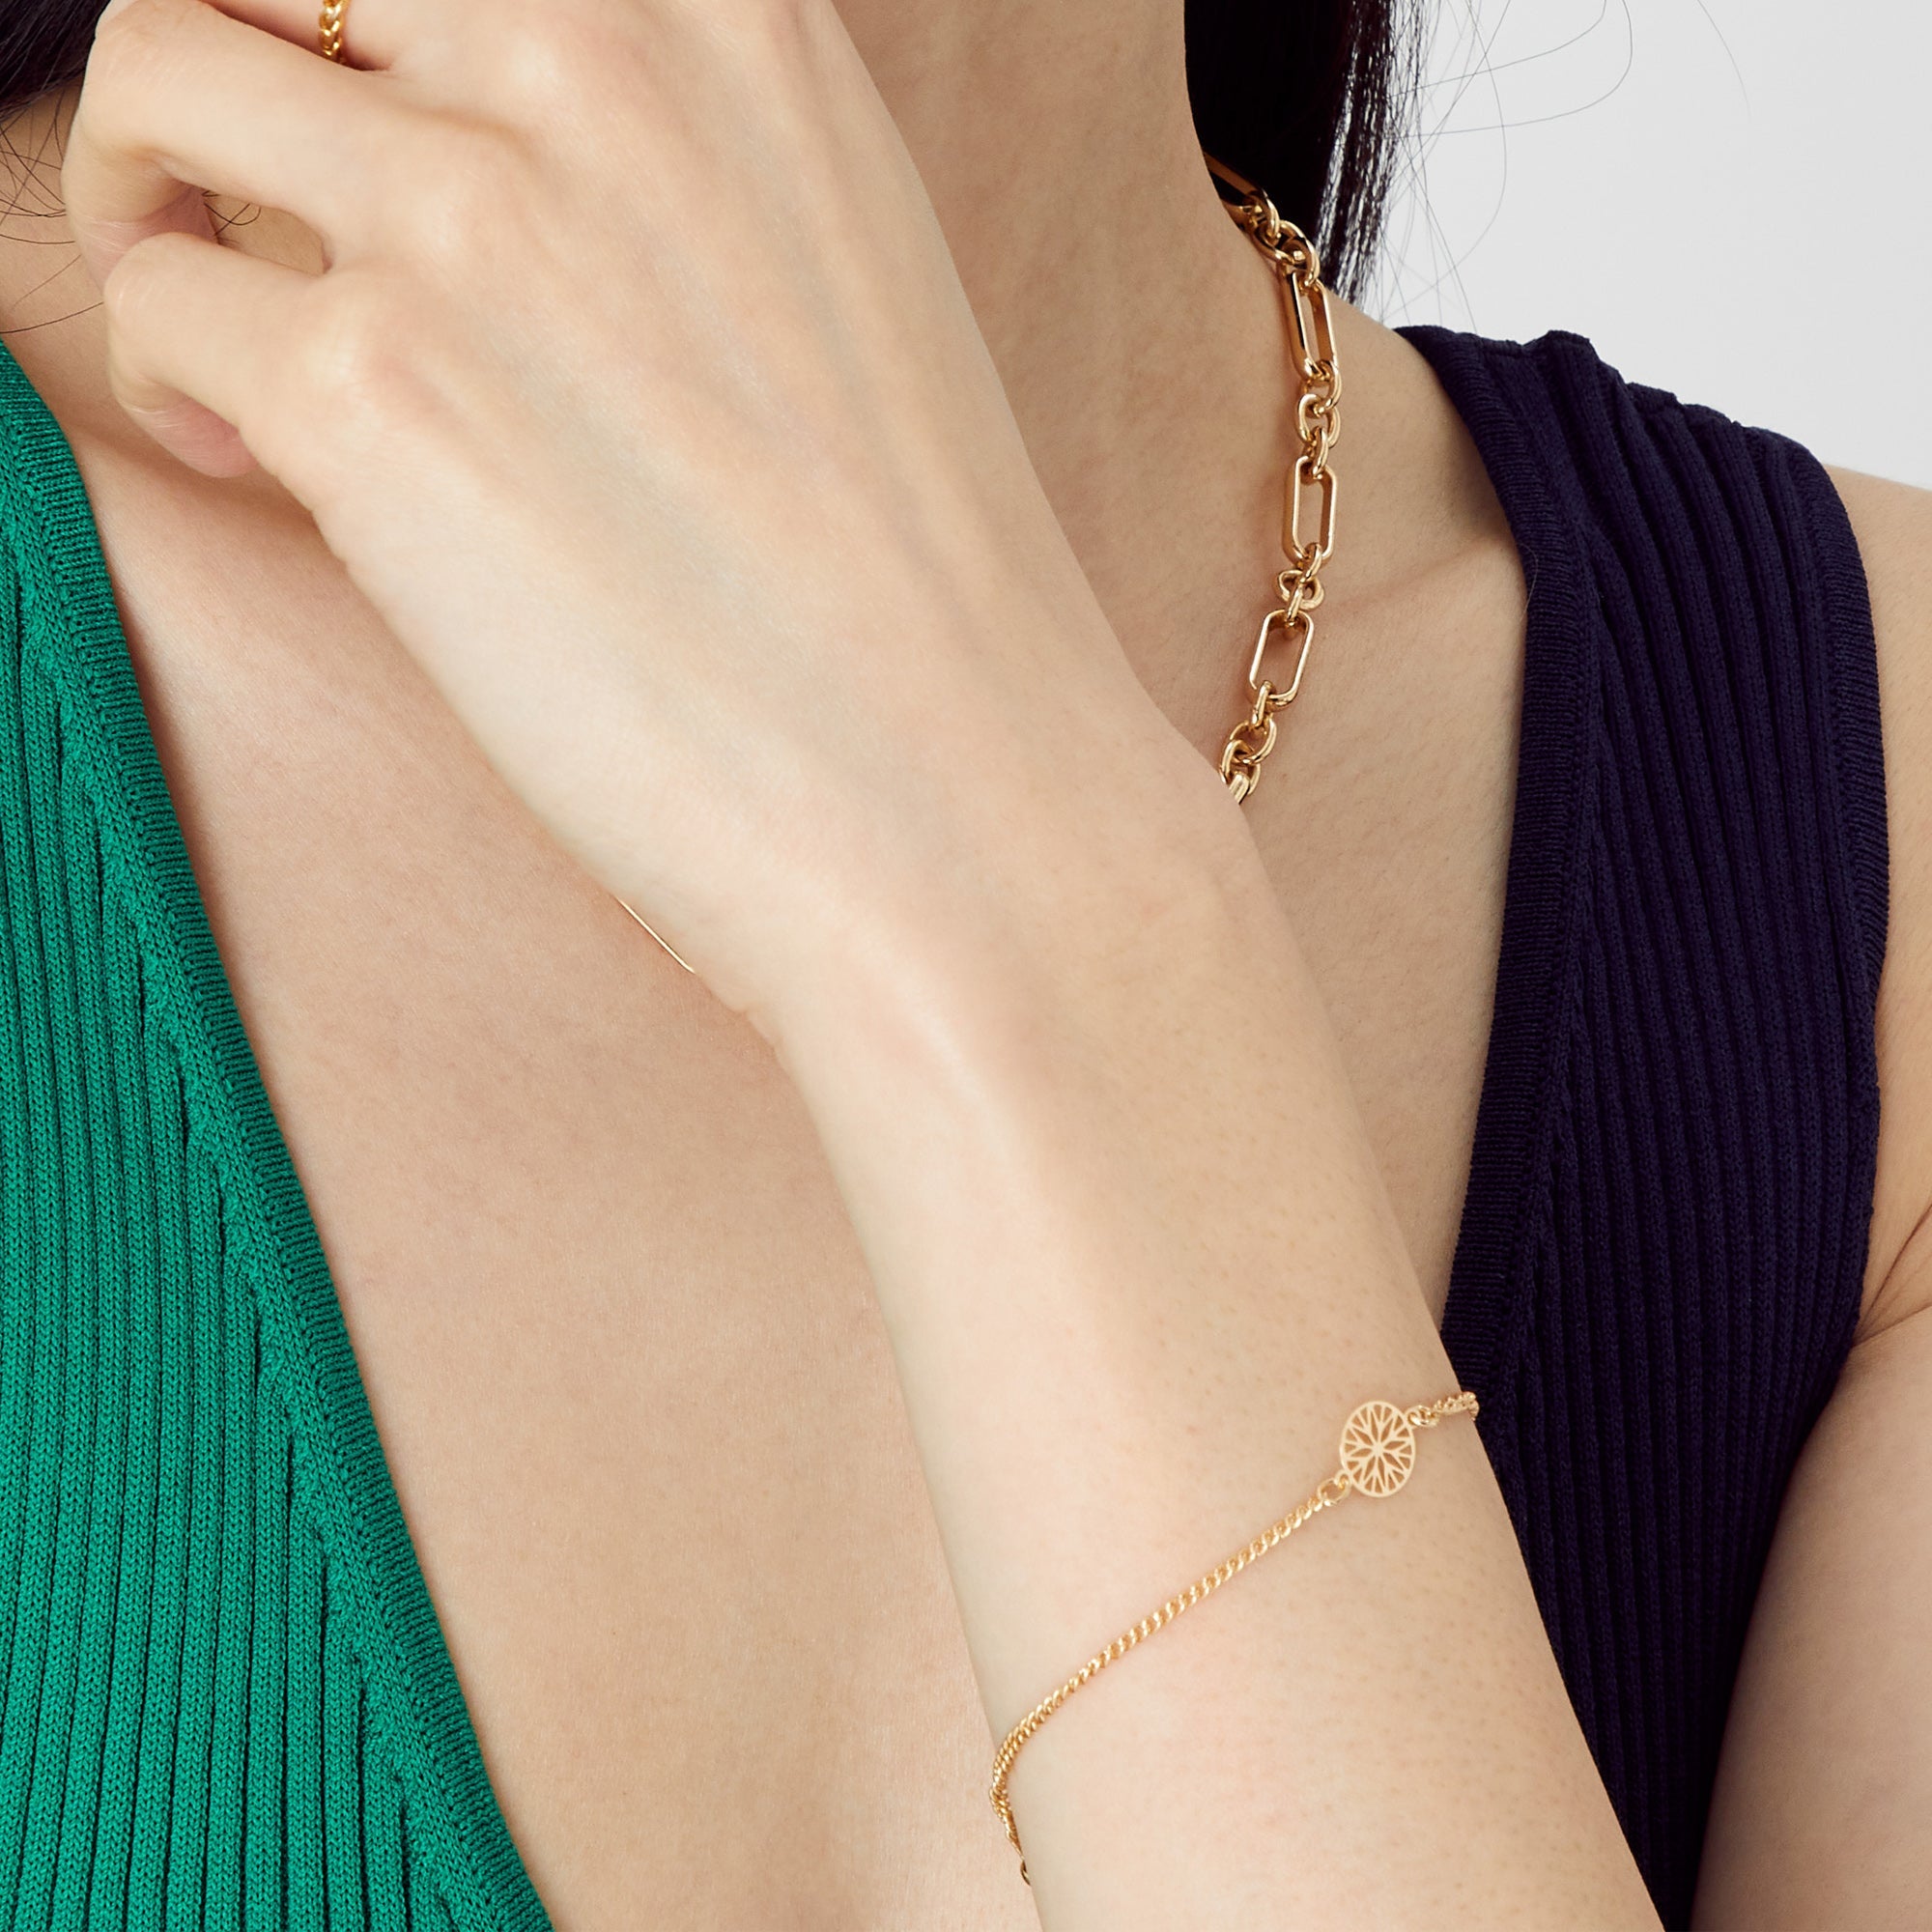 Accessorize London Women'S Gold Filigree Clasp Bracelet